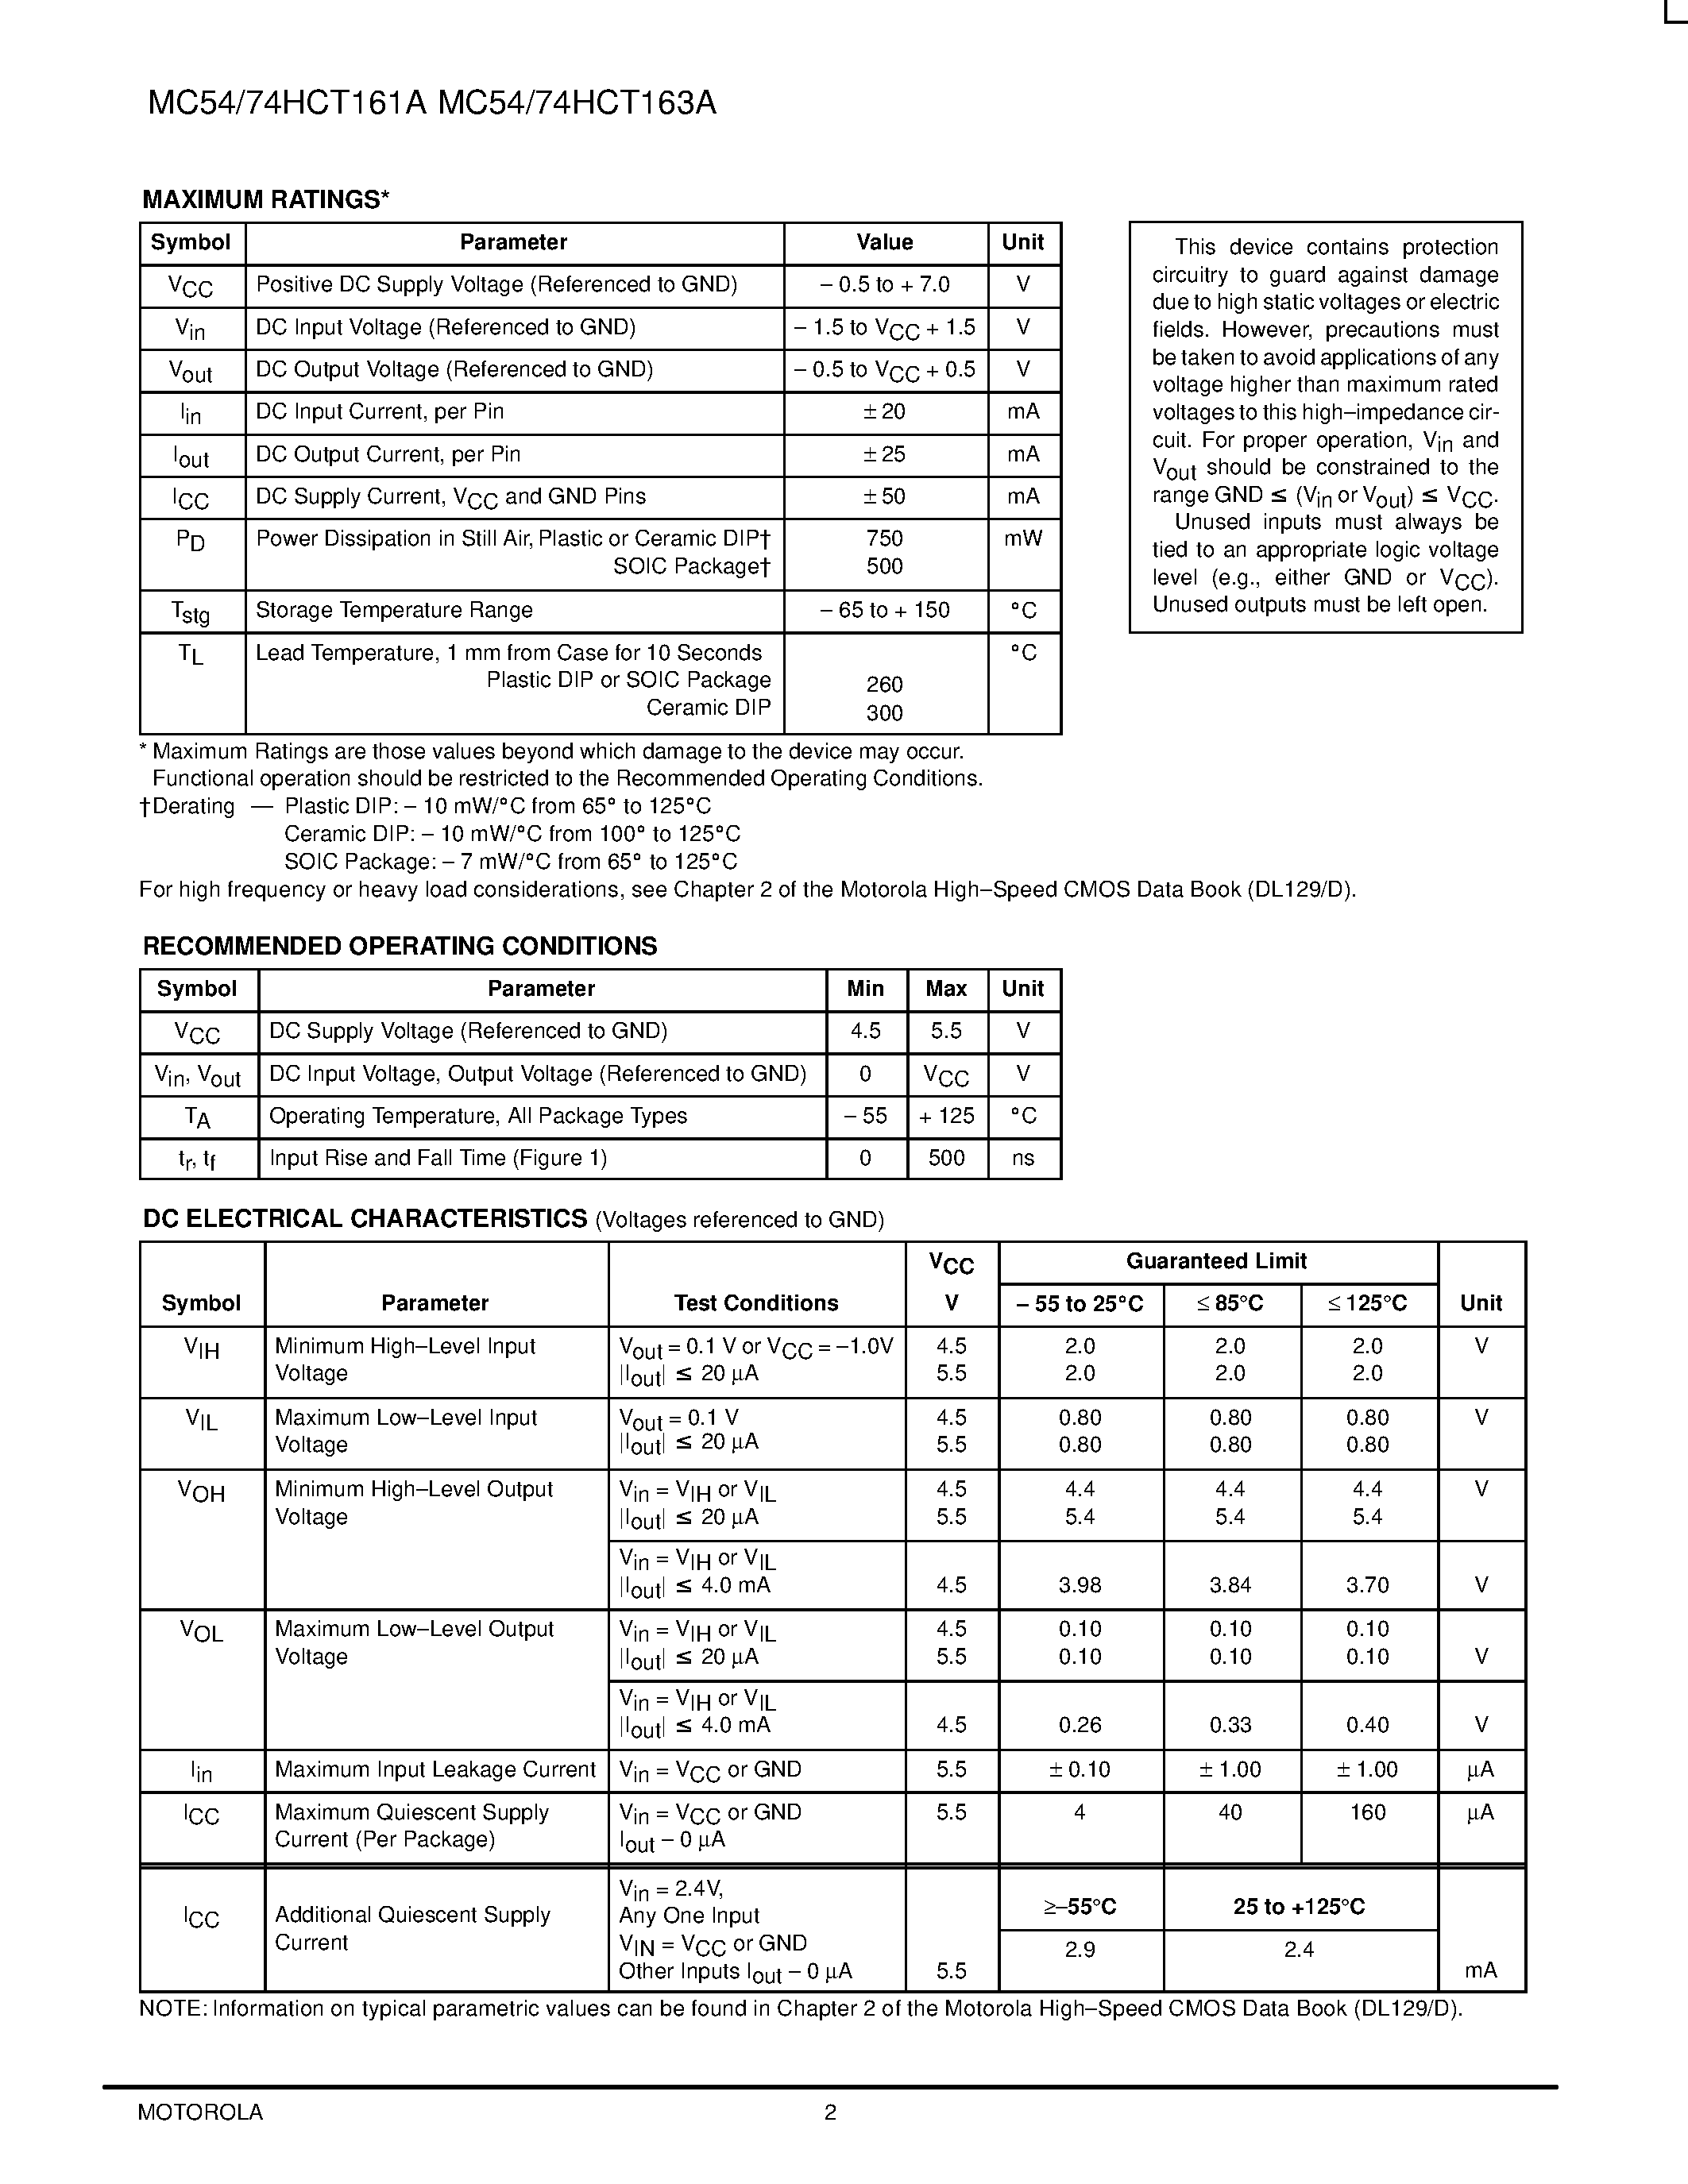 Datasheet MC74HC161A - (MC74HC161A / MC74HC163A) Presettable Counters page 2